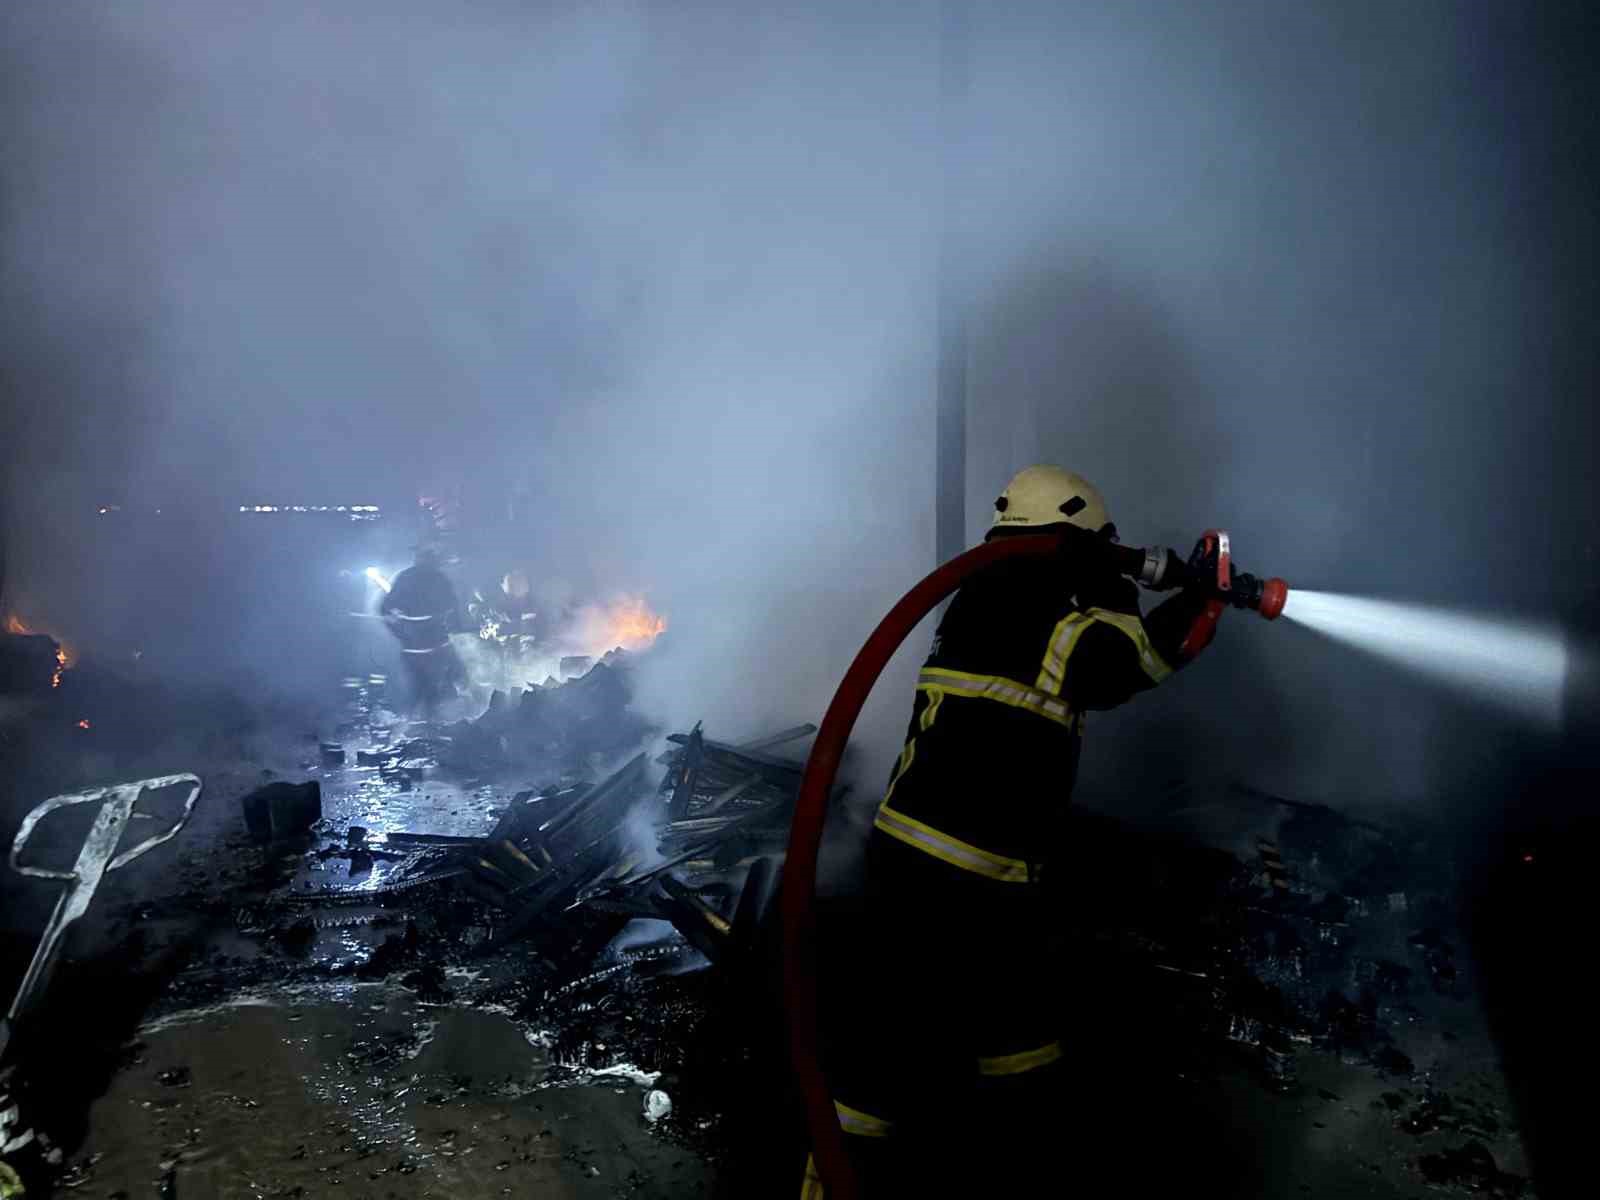 Palet fabrikası alev alev yandı: Hasar büyük
